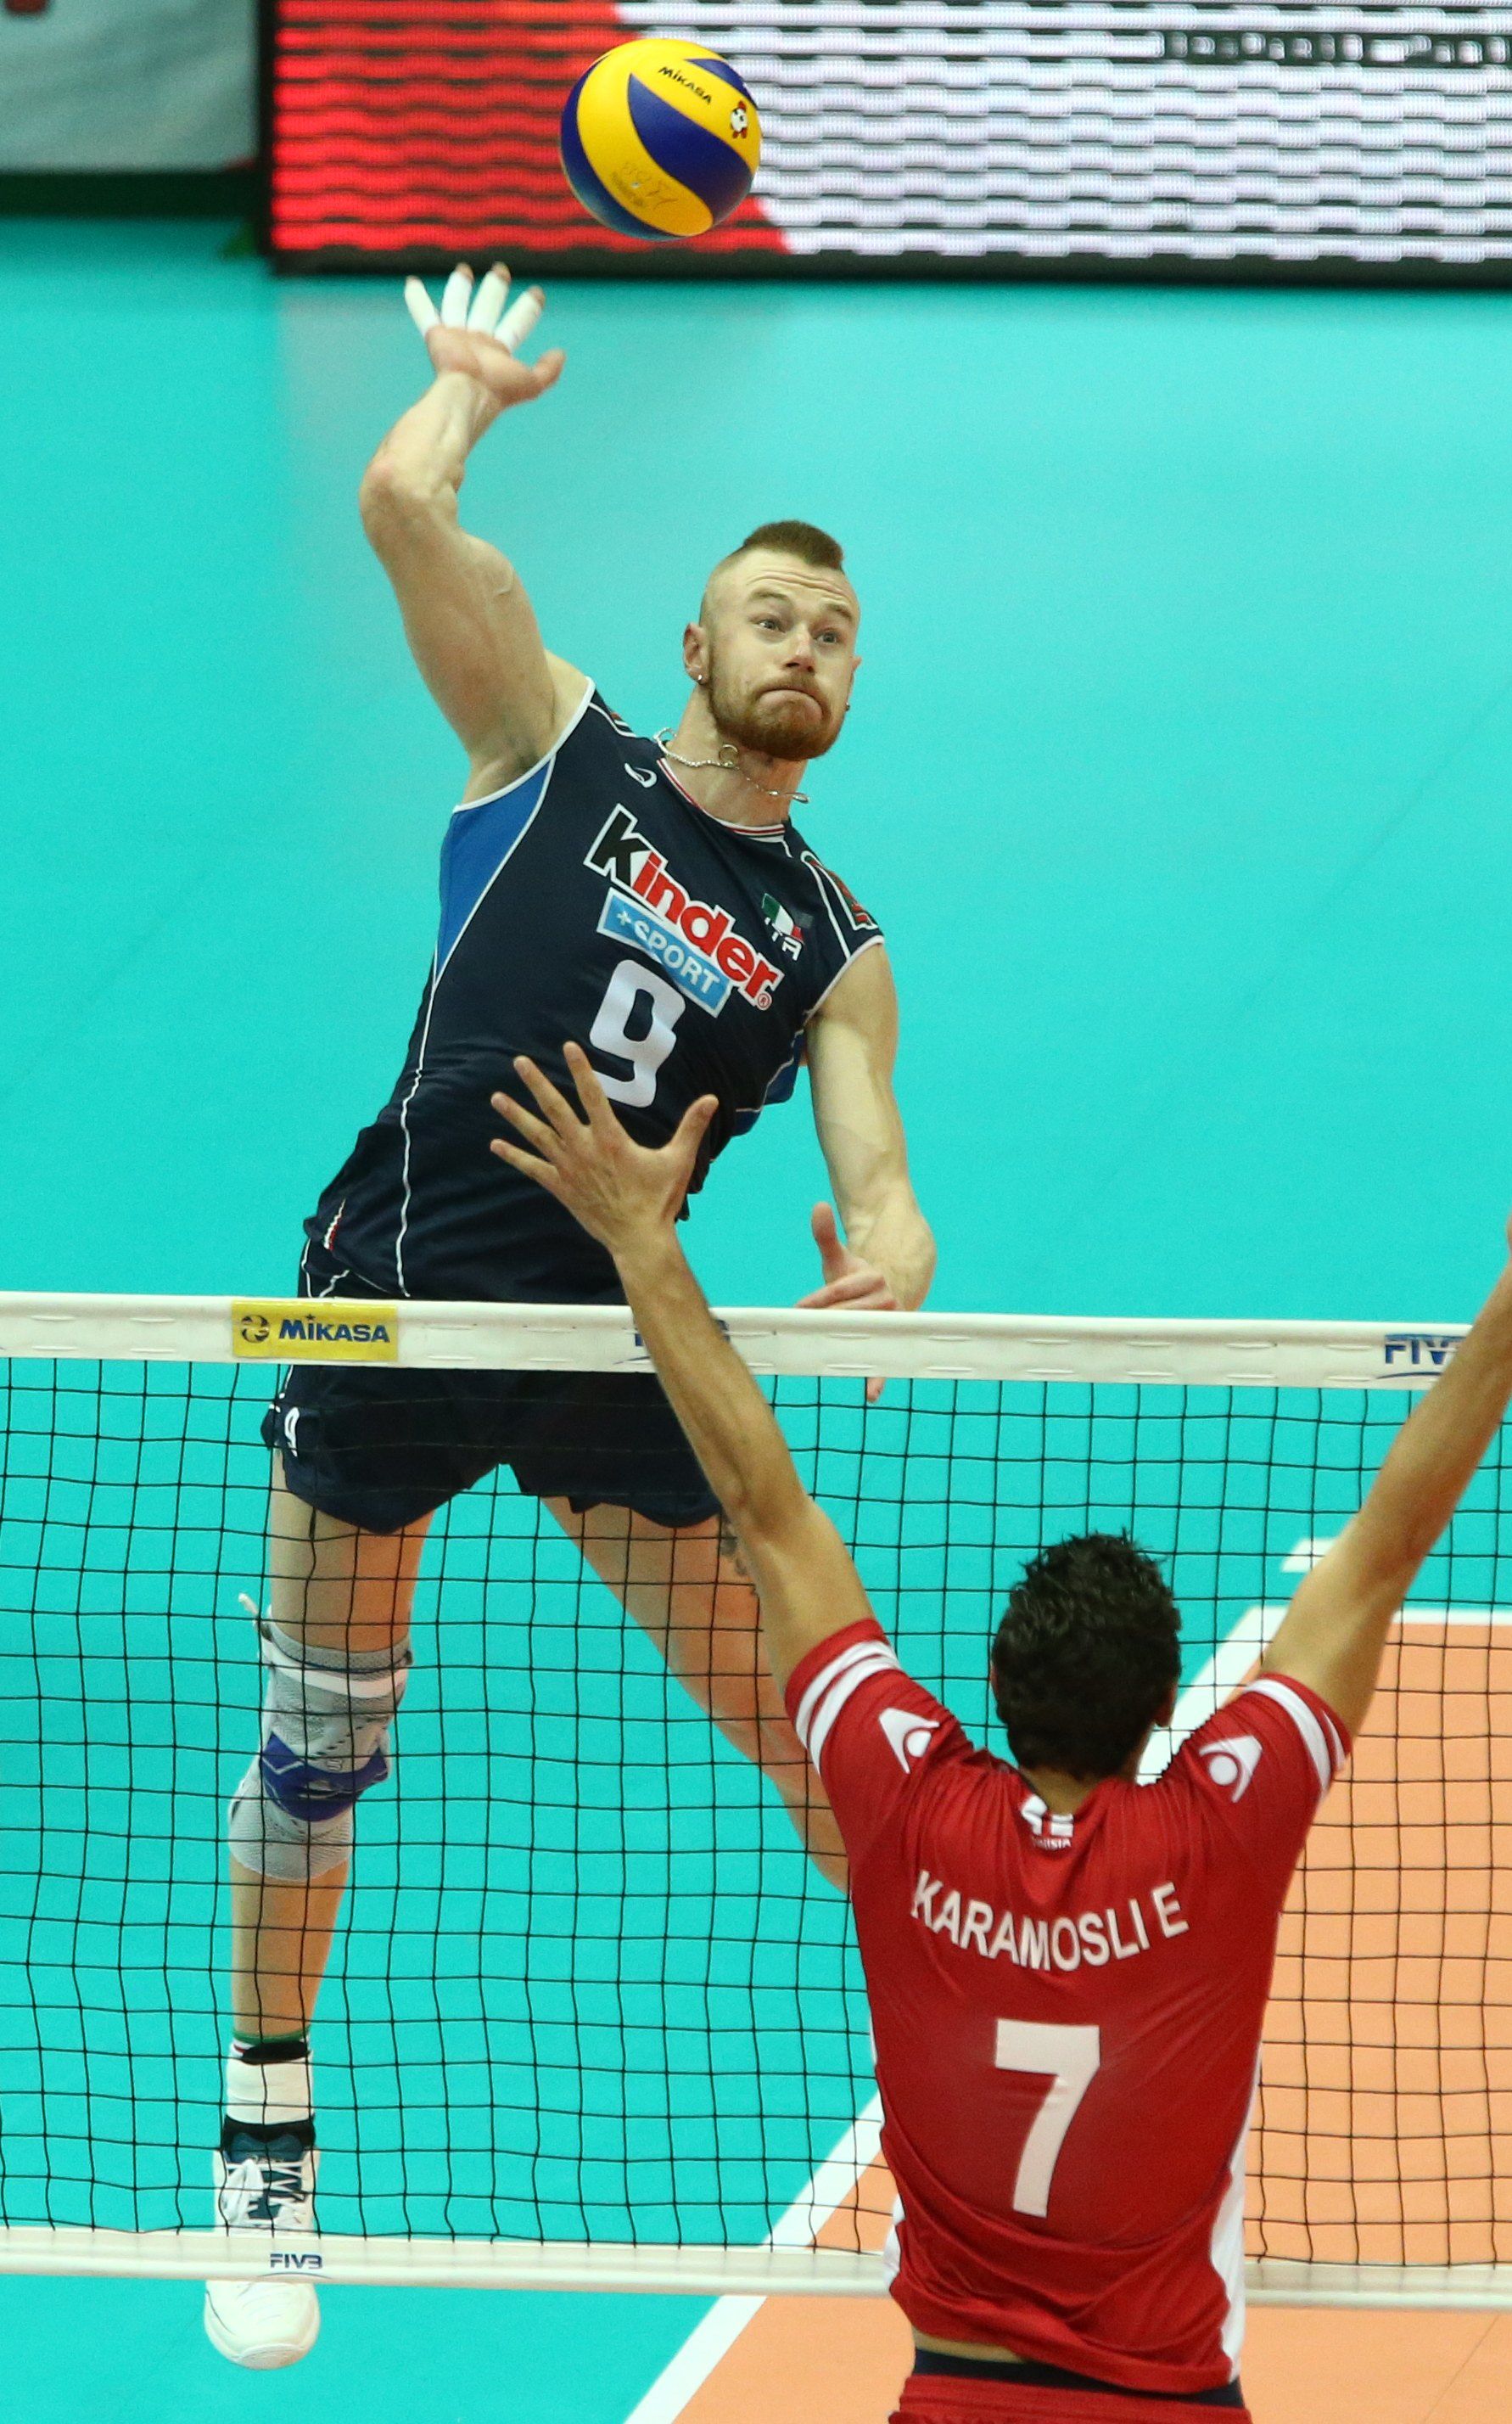 Ivan Zaytsev spikes against Tunisia's block. Volleyball wallpaper